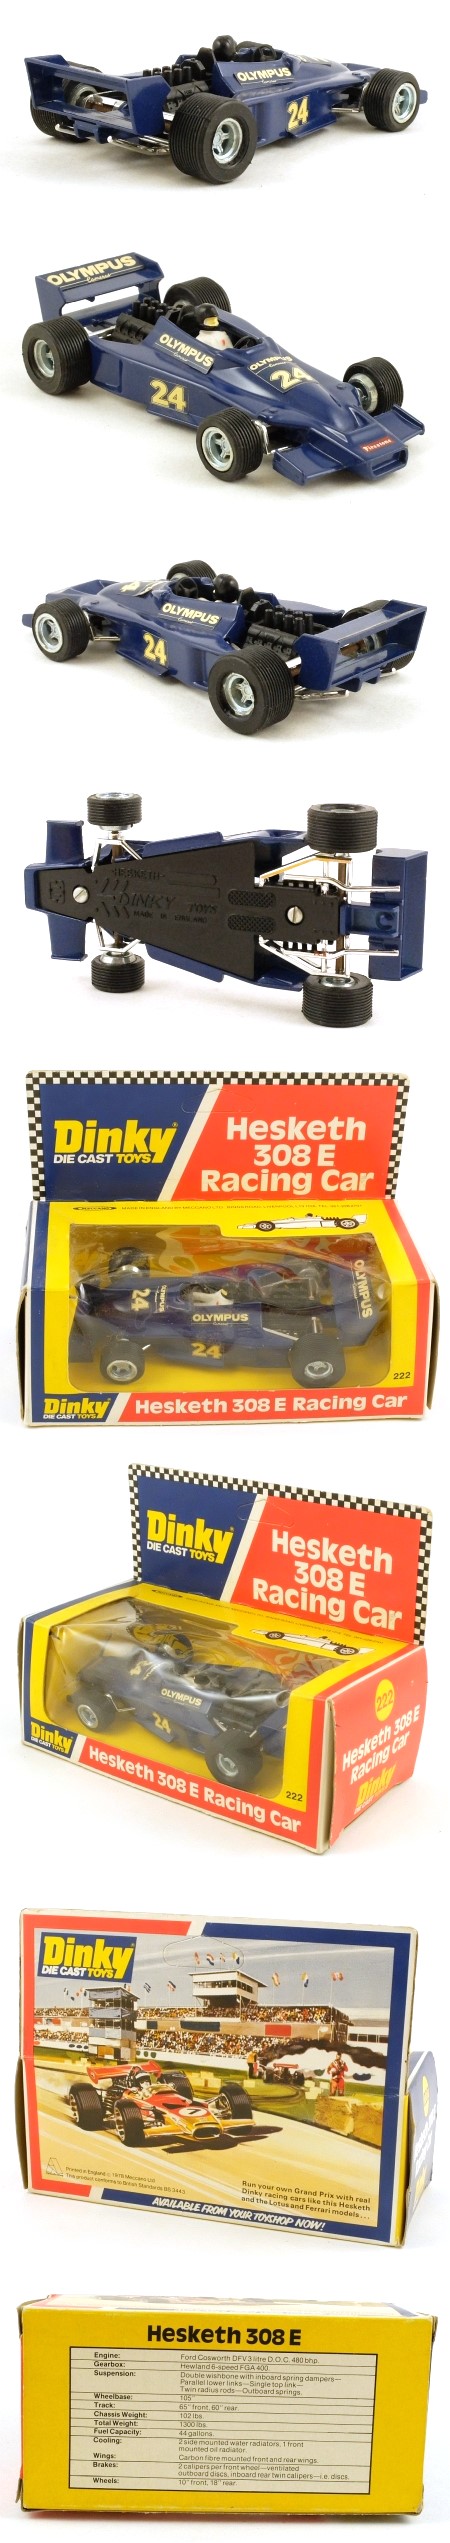 222 Hesketh 308E Racing Car